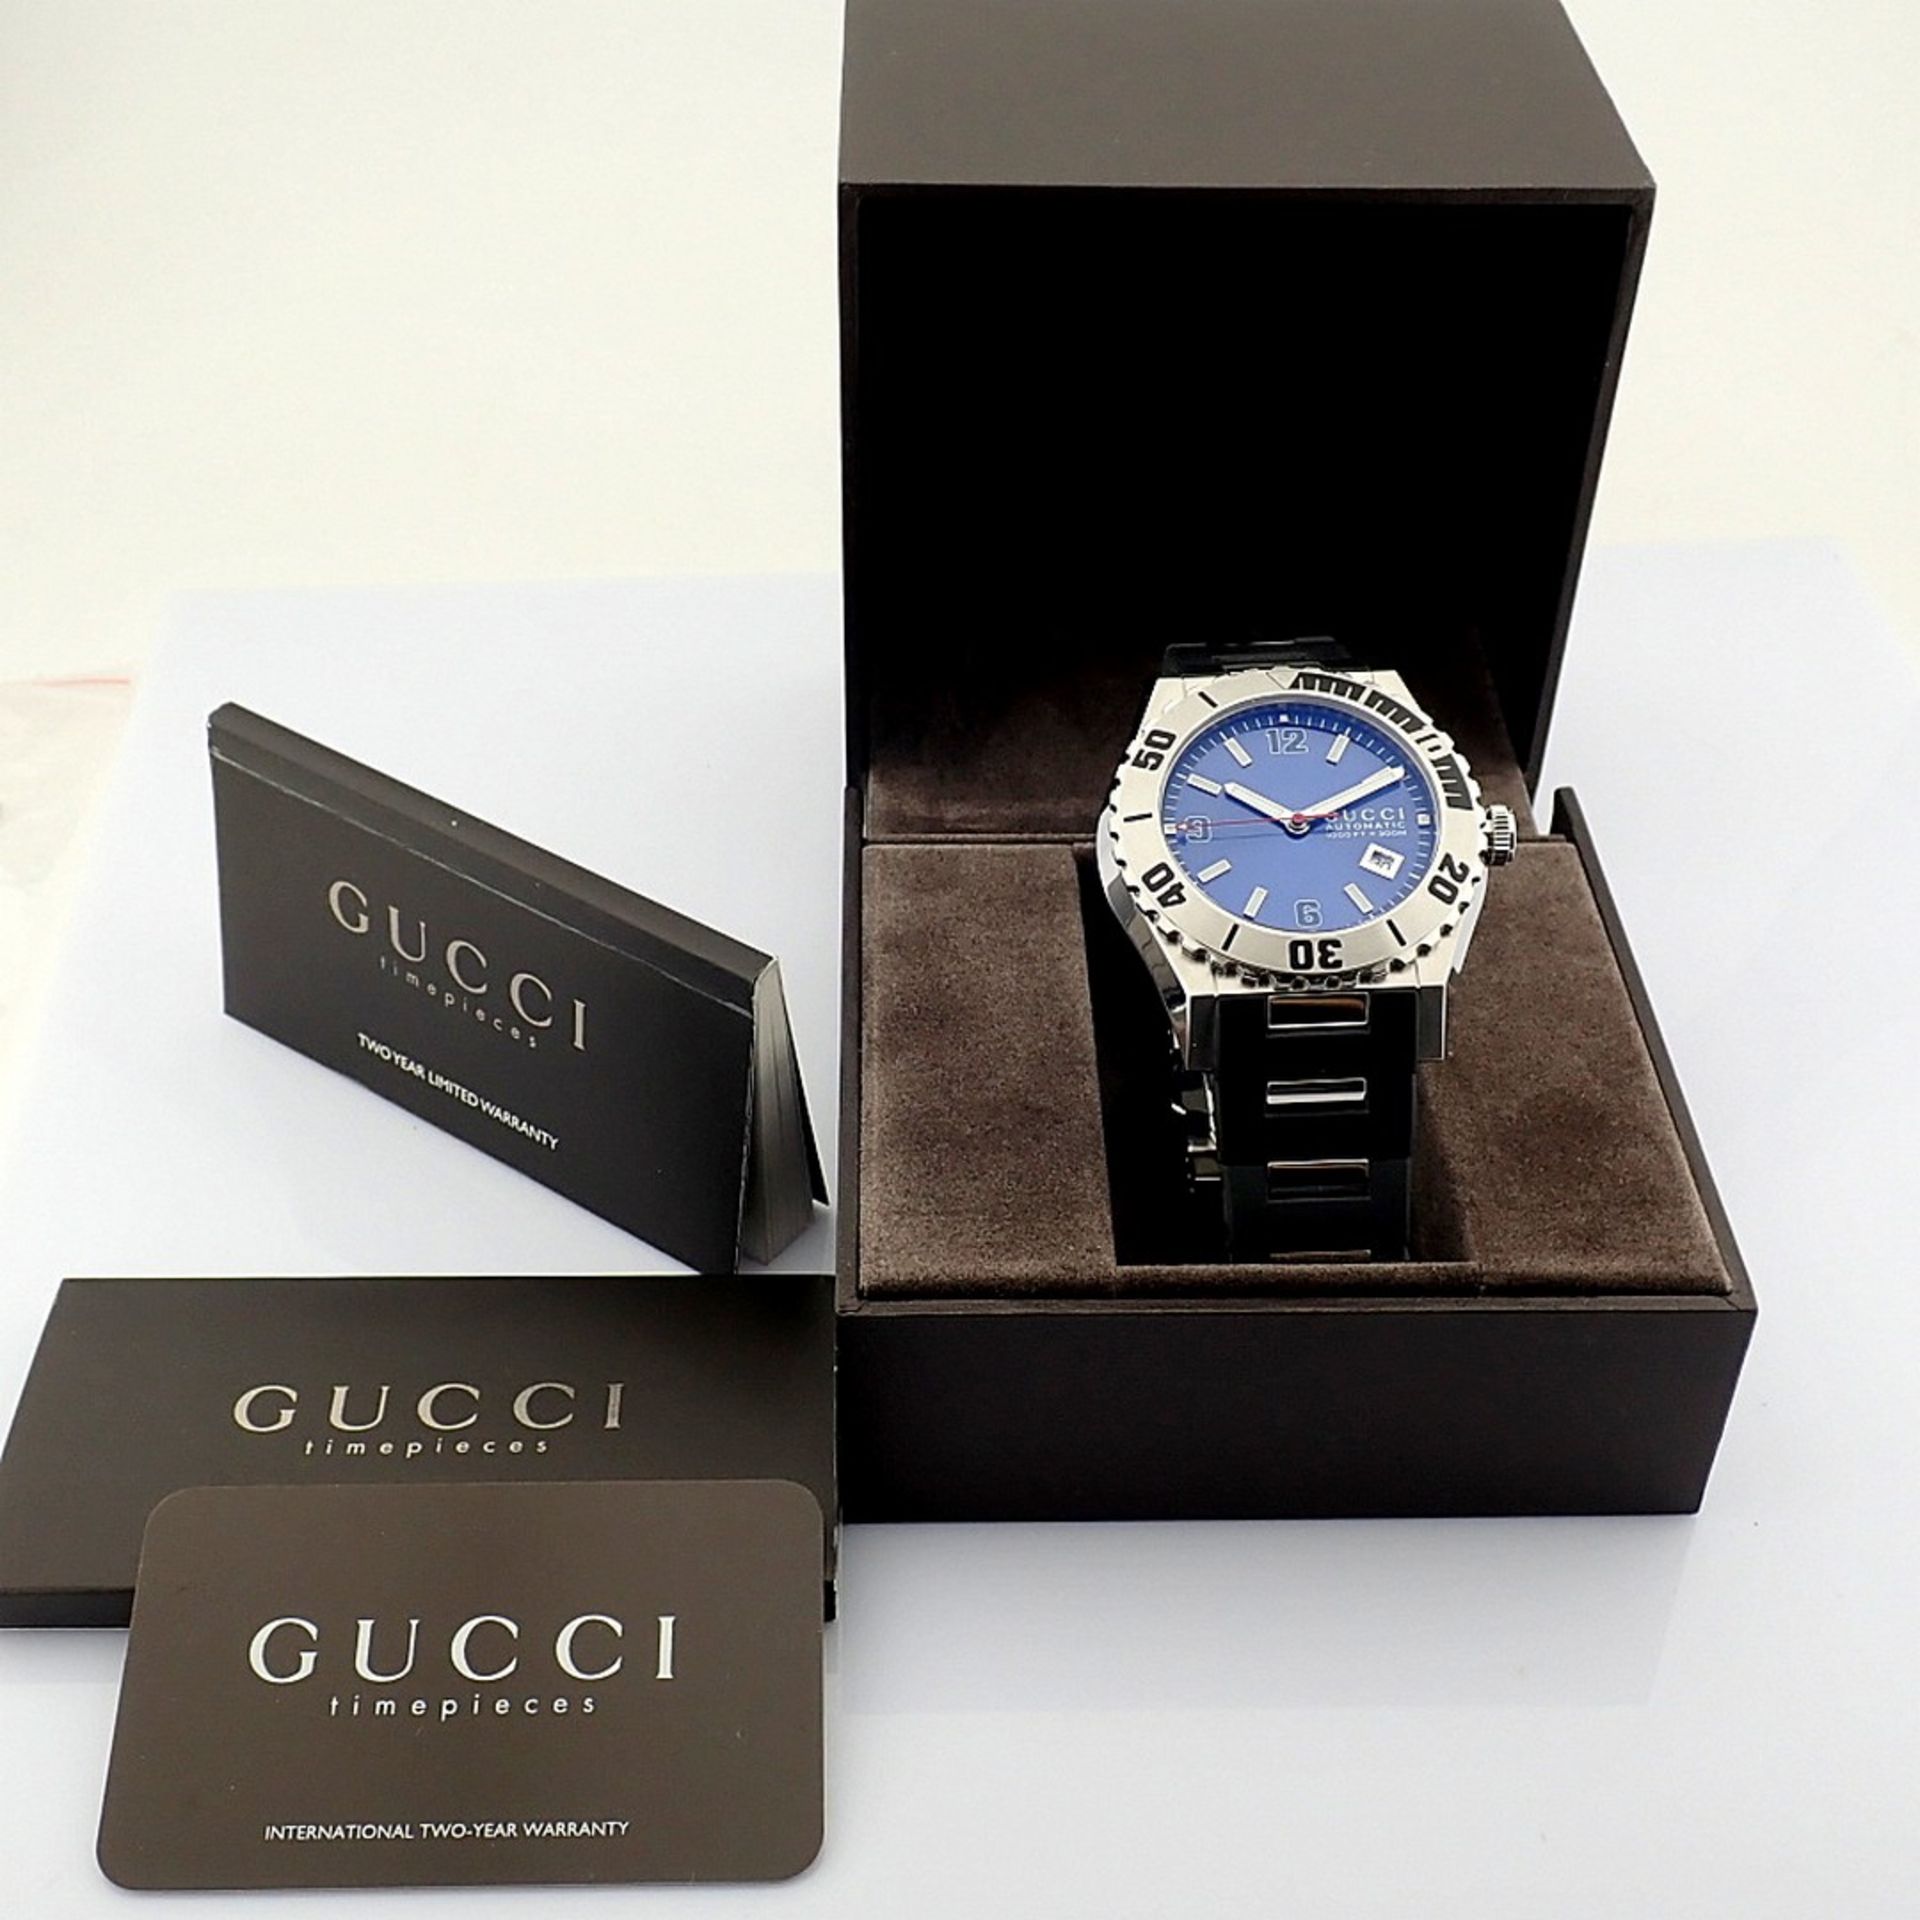 Gucci / Pantheon 115.2 (Brand New) - Gentlemen's Steel Wristwatch - Image 4 of 13